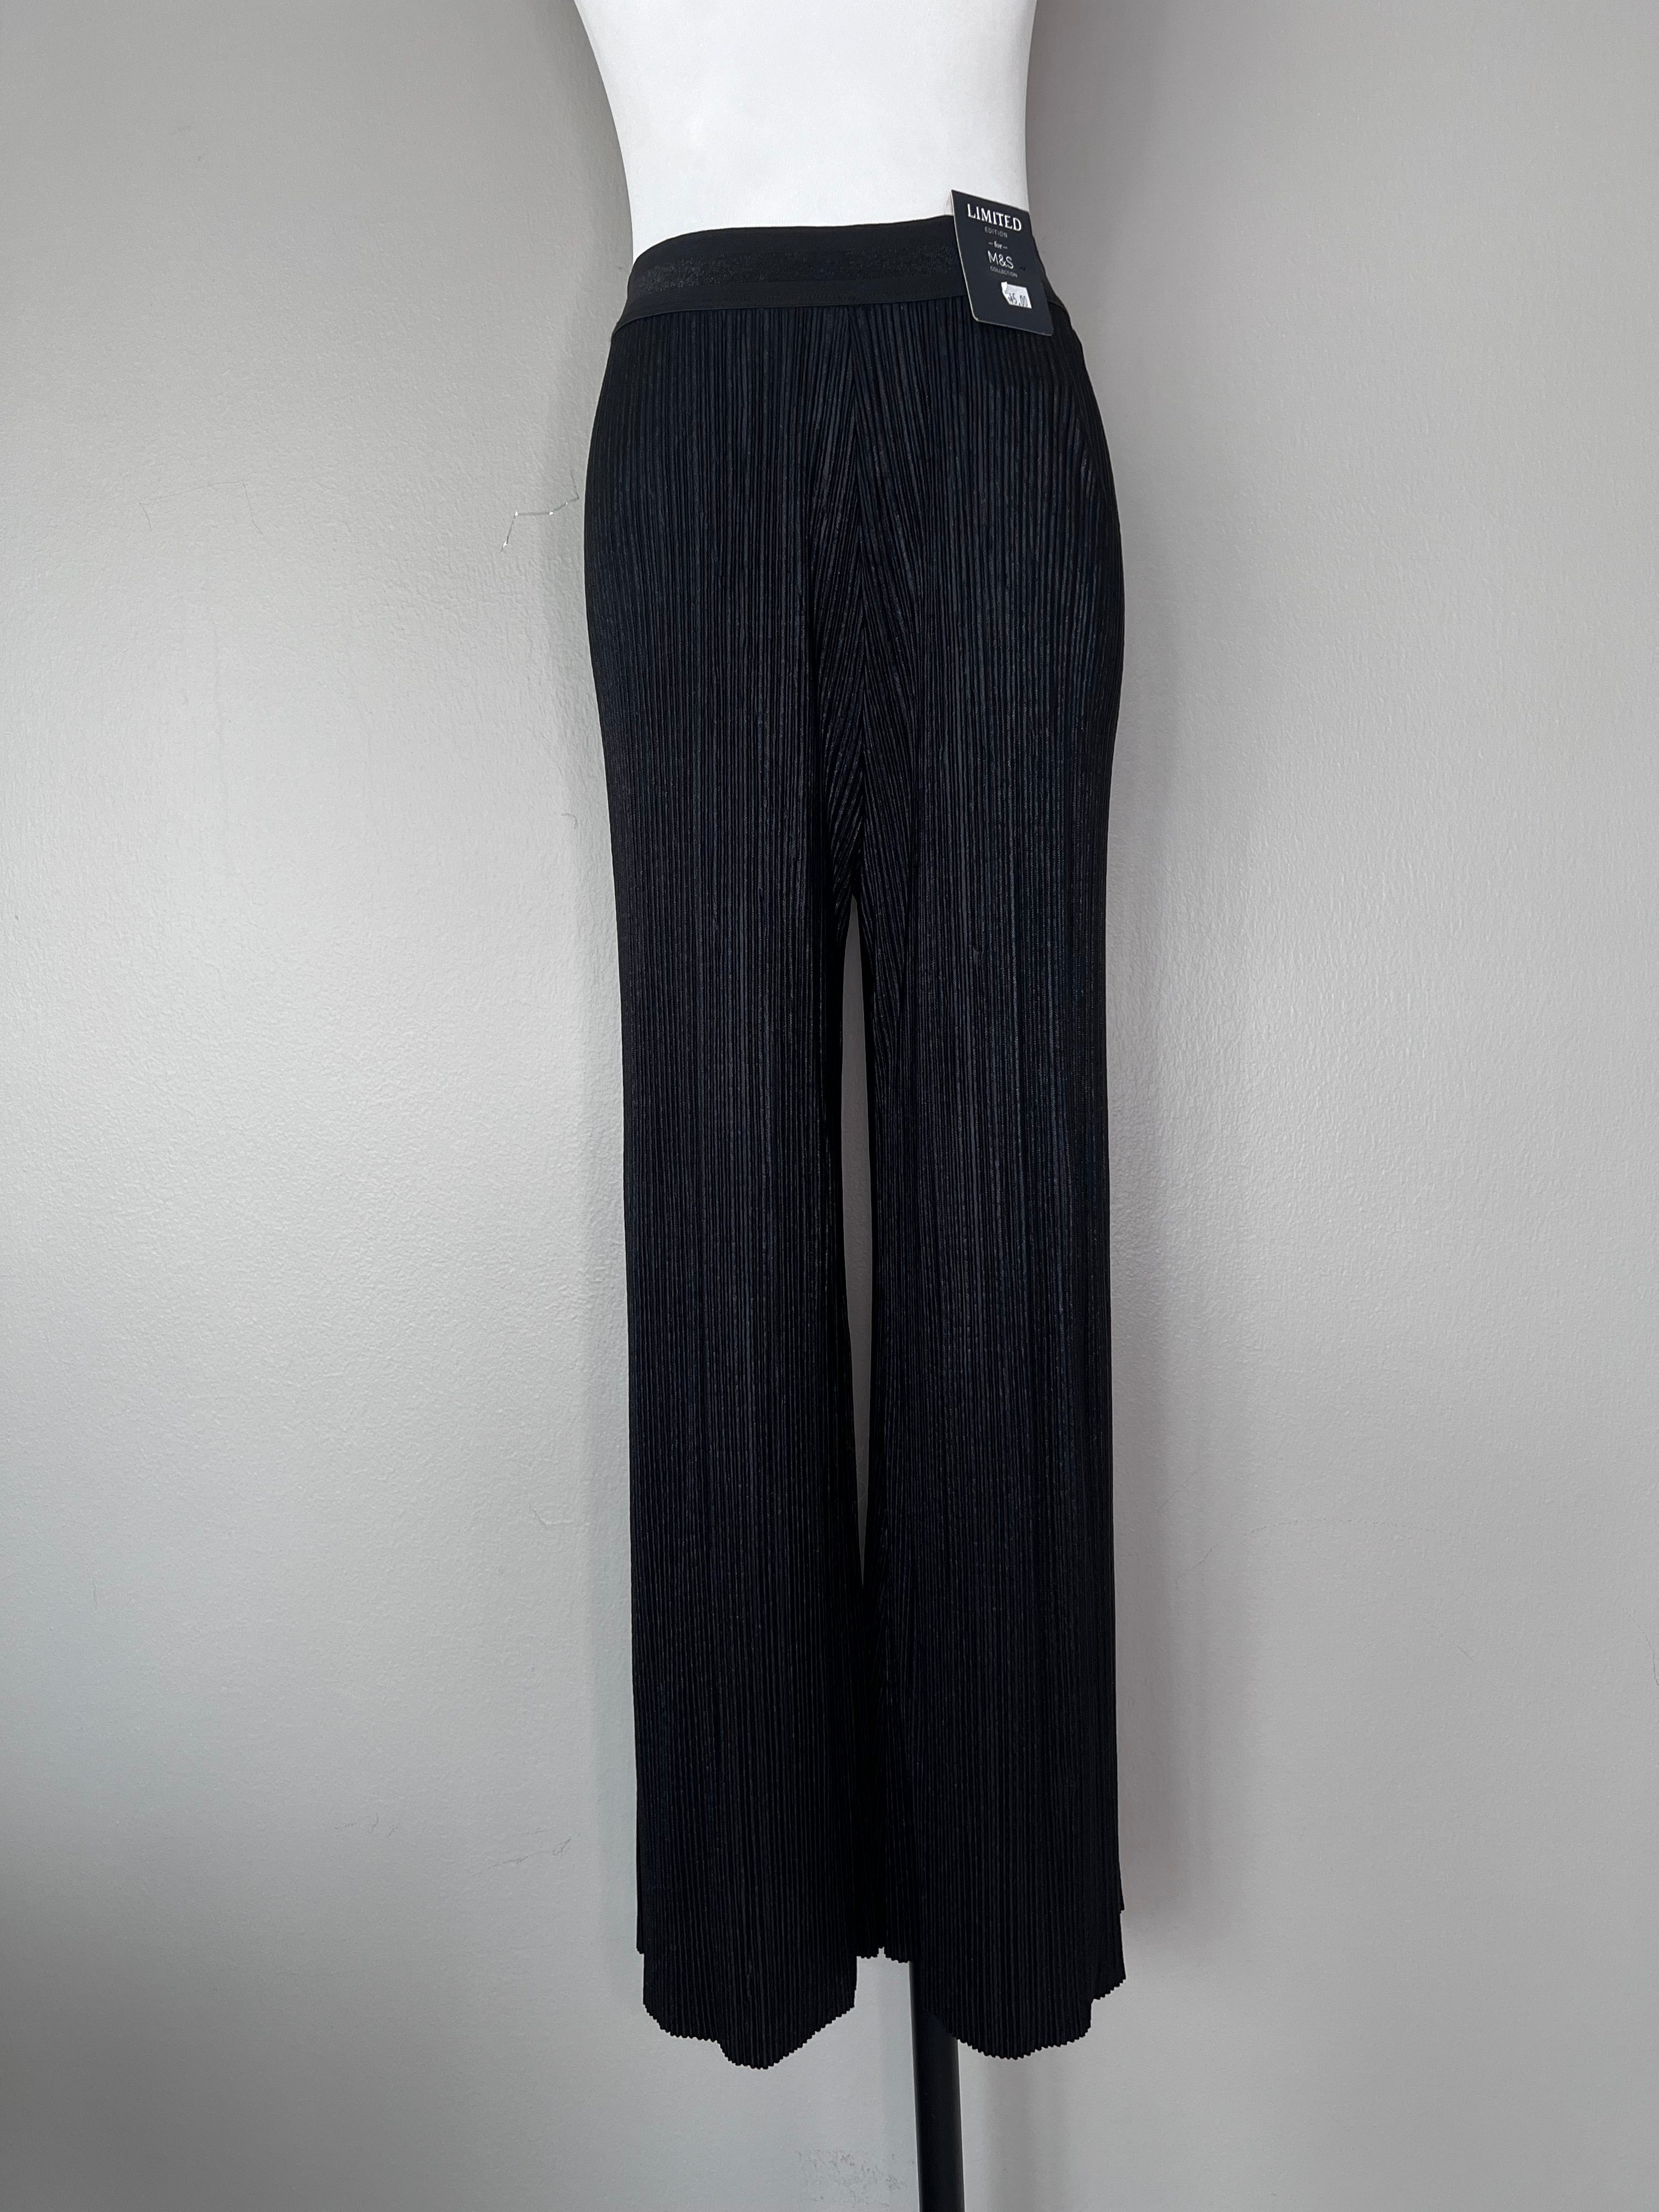 Brand new black pleated pants - Marks&Spencer